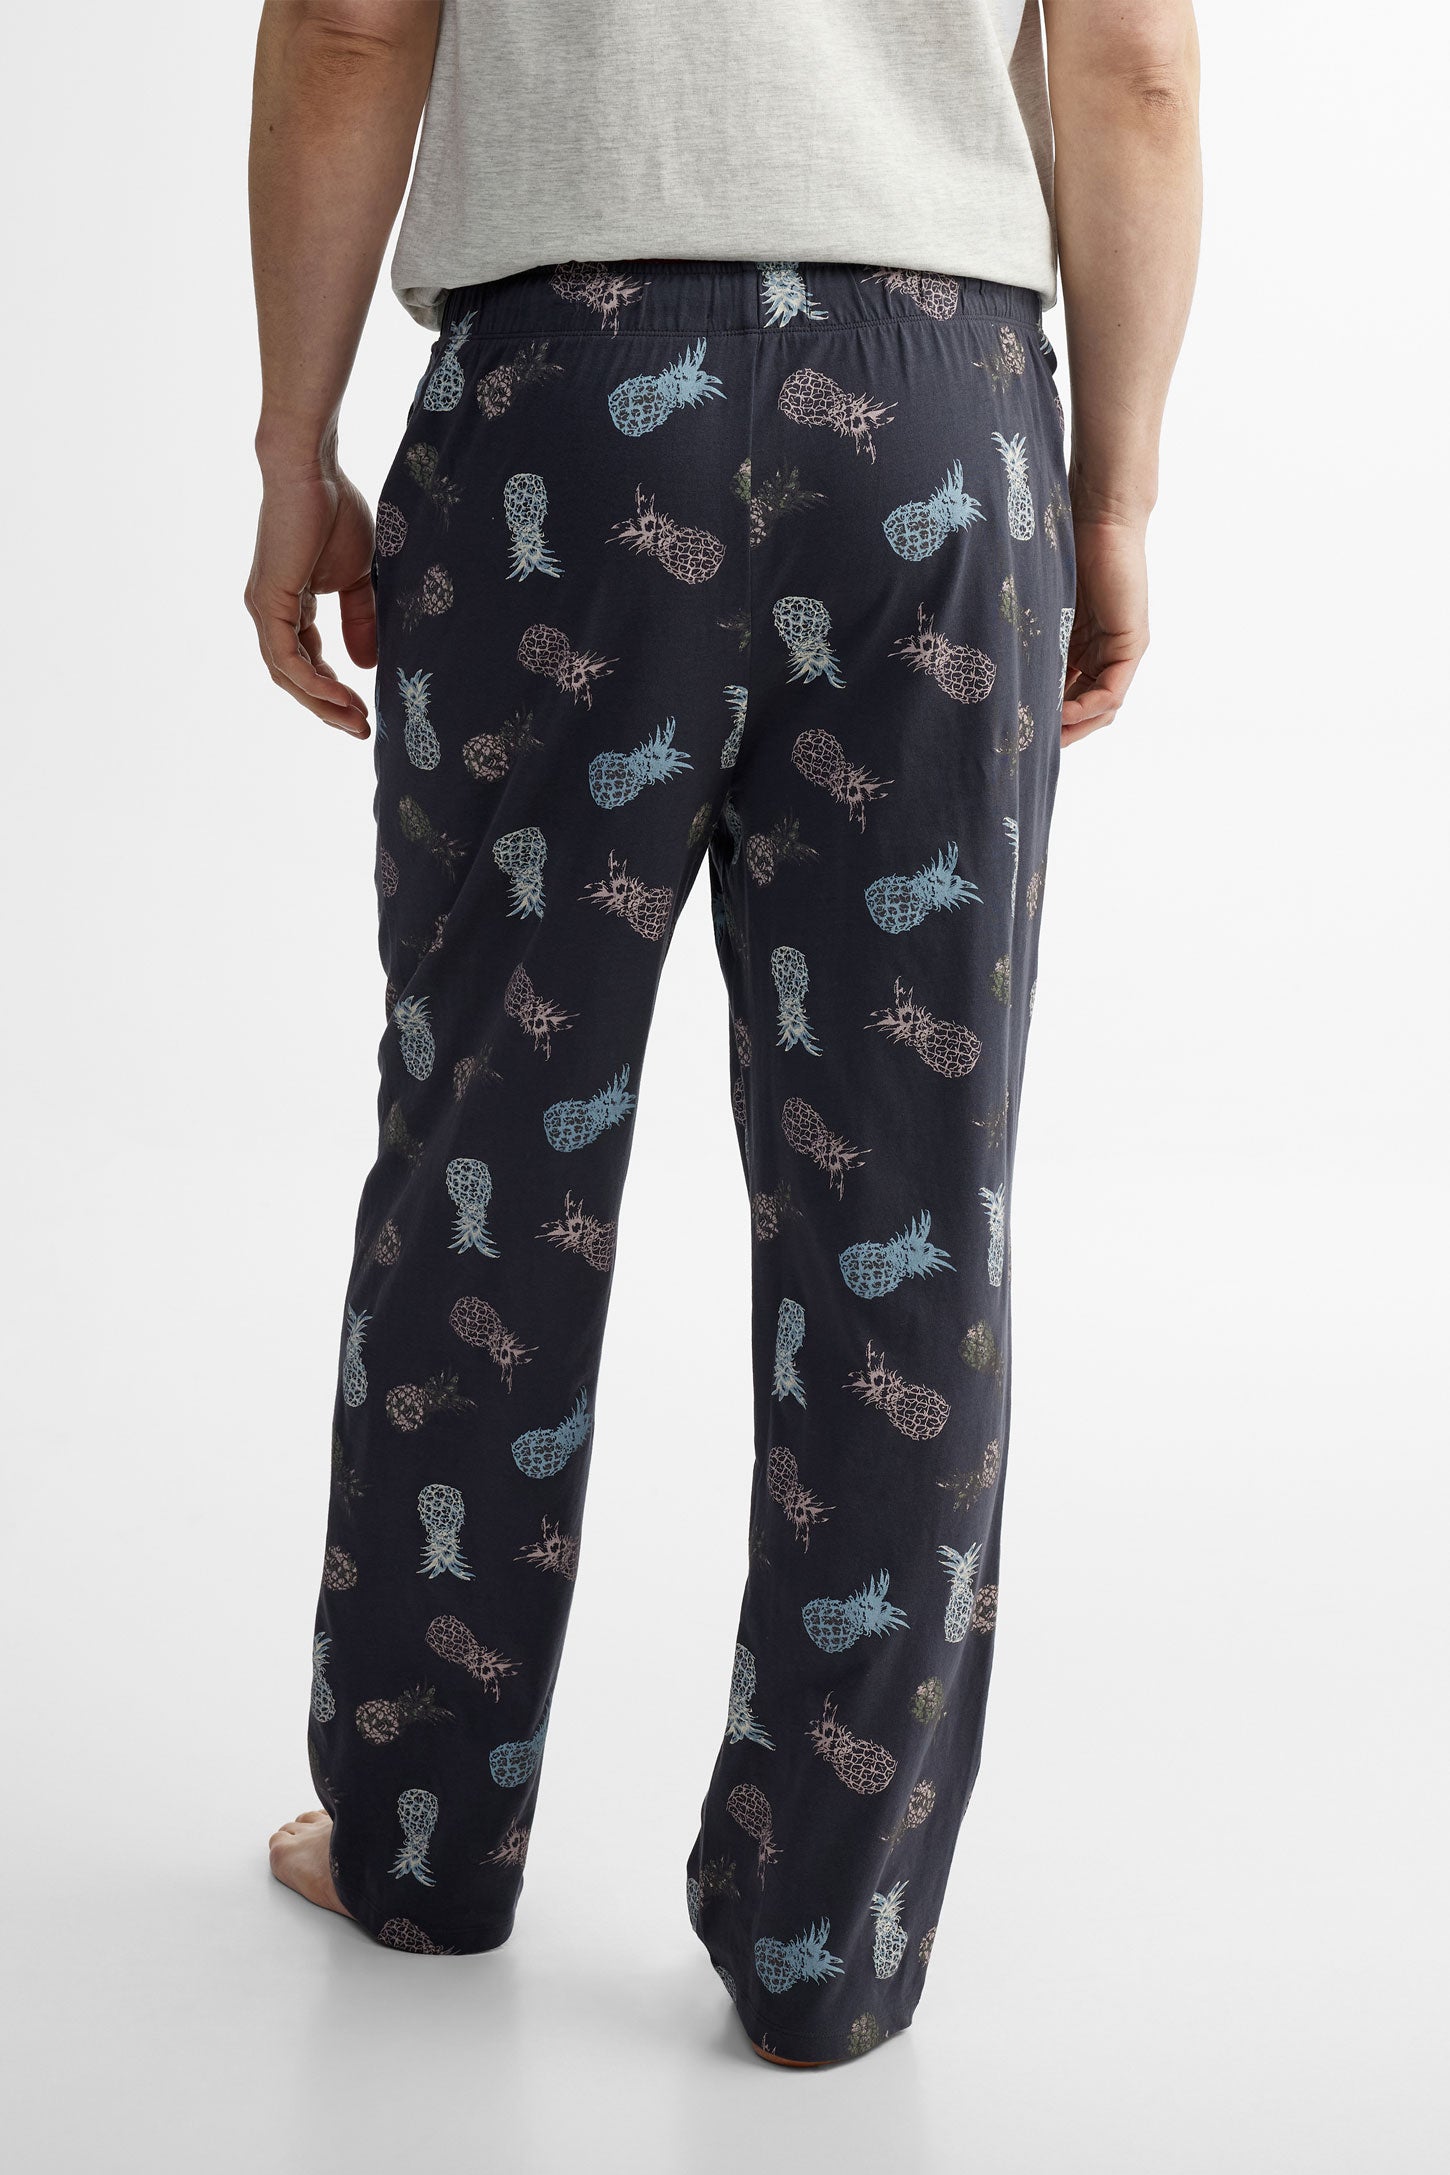 Pantalon pyjama en coton, 2/40$ - Homme && MAUVE/MULTI